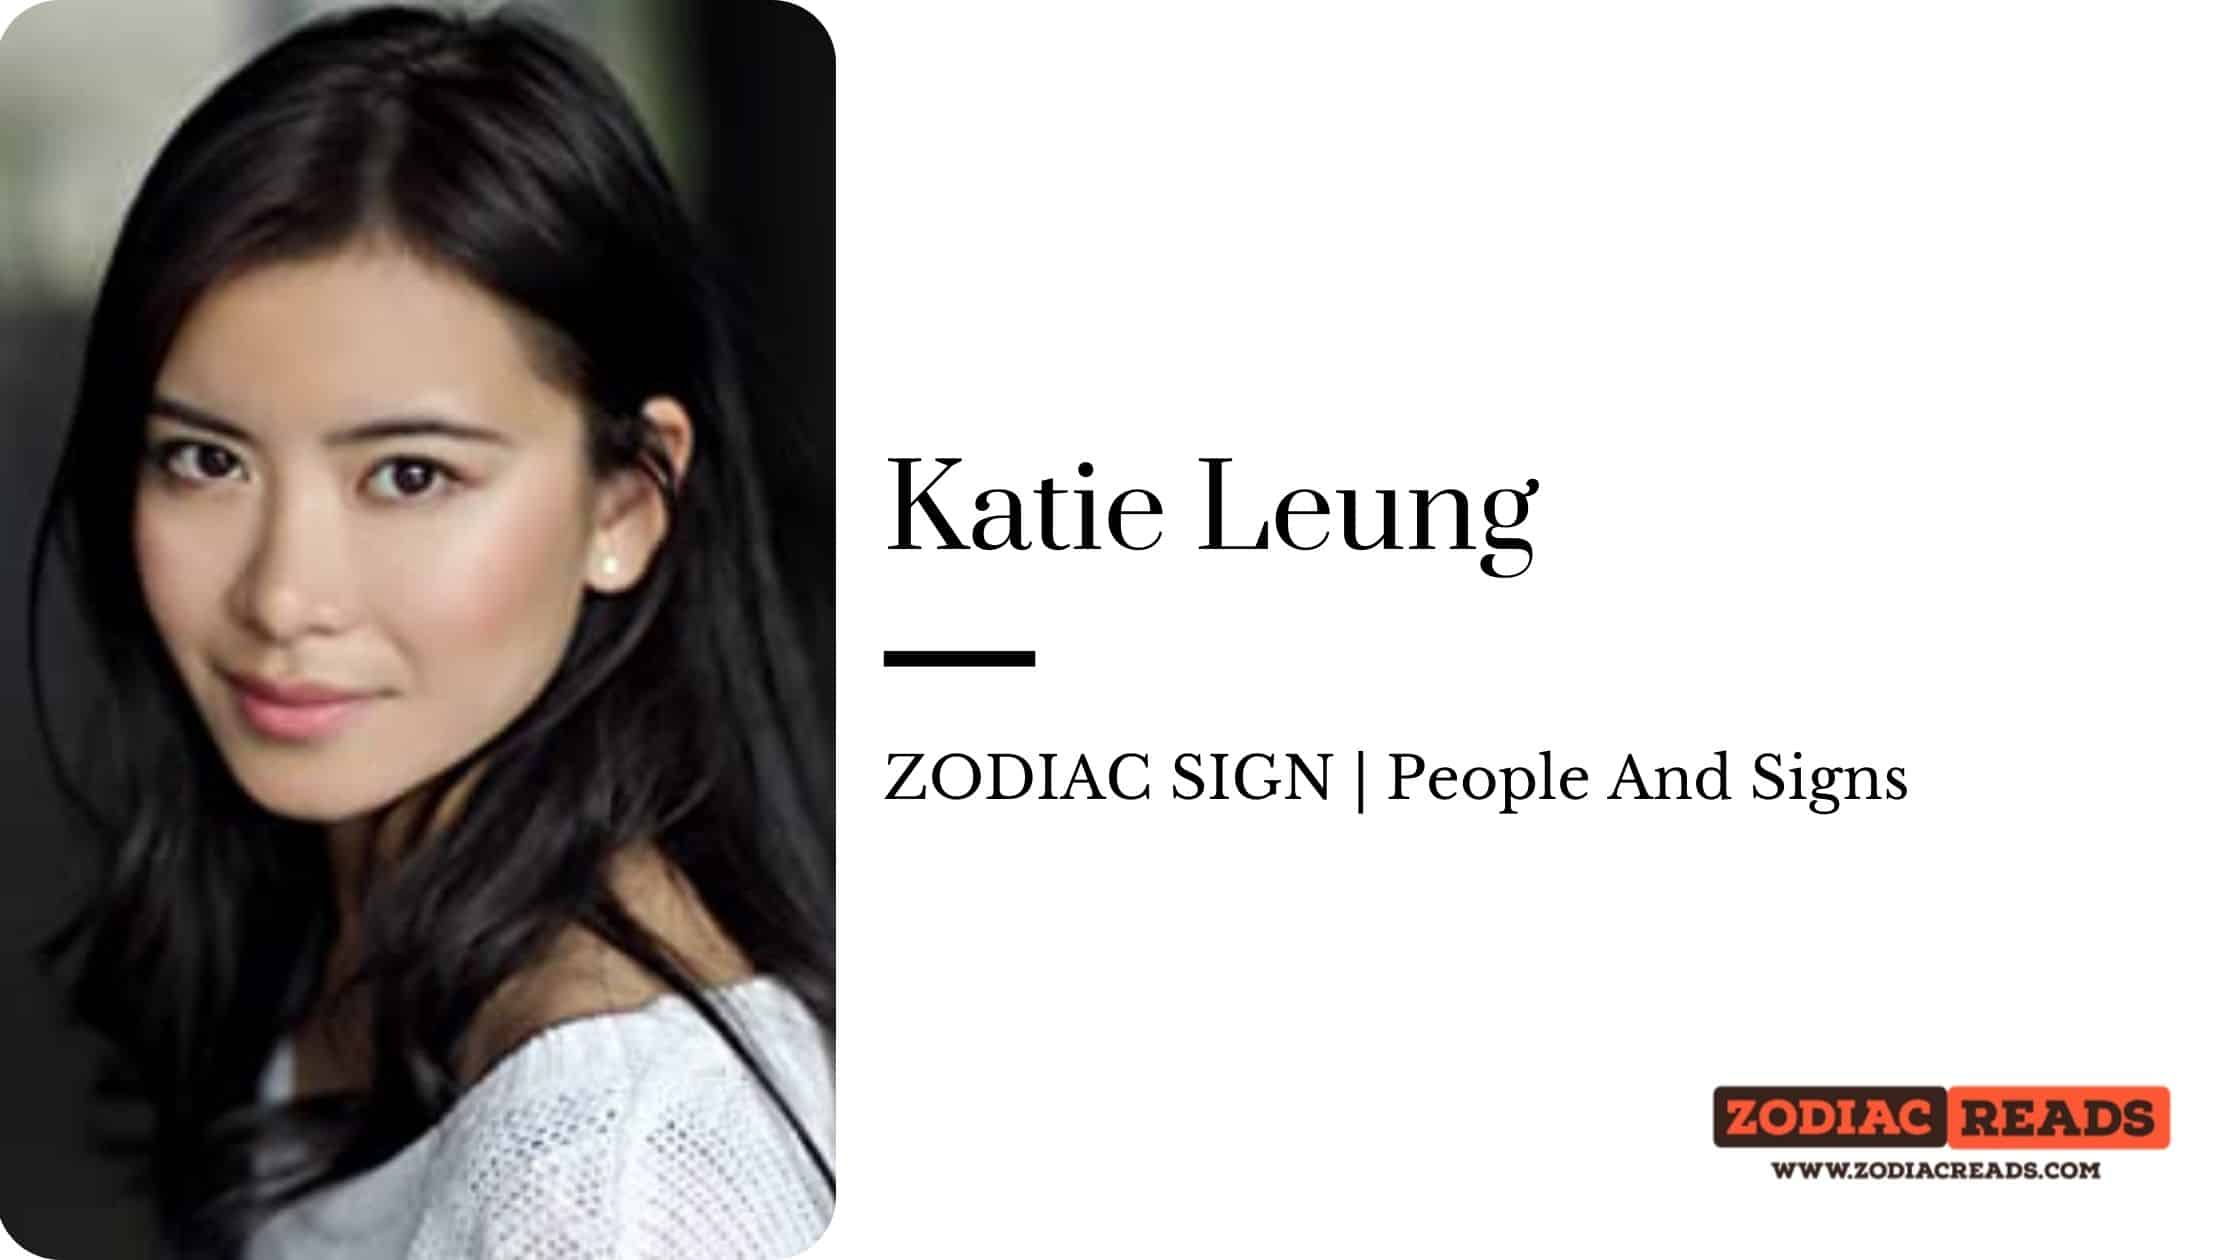 Katie Leung zodiac